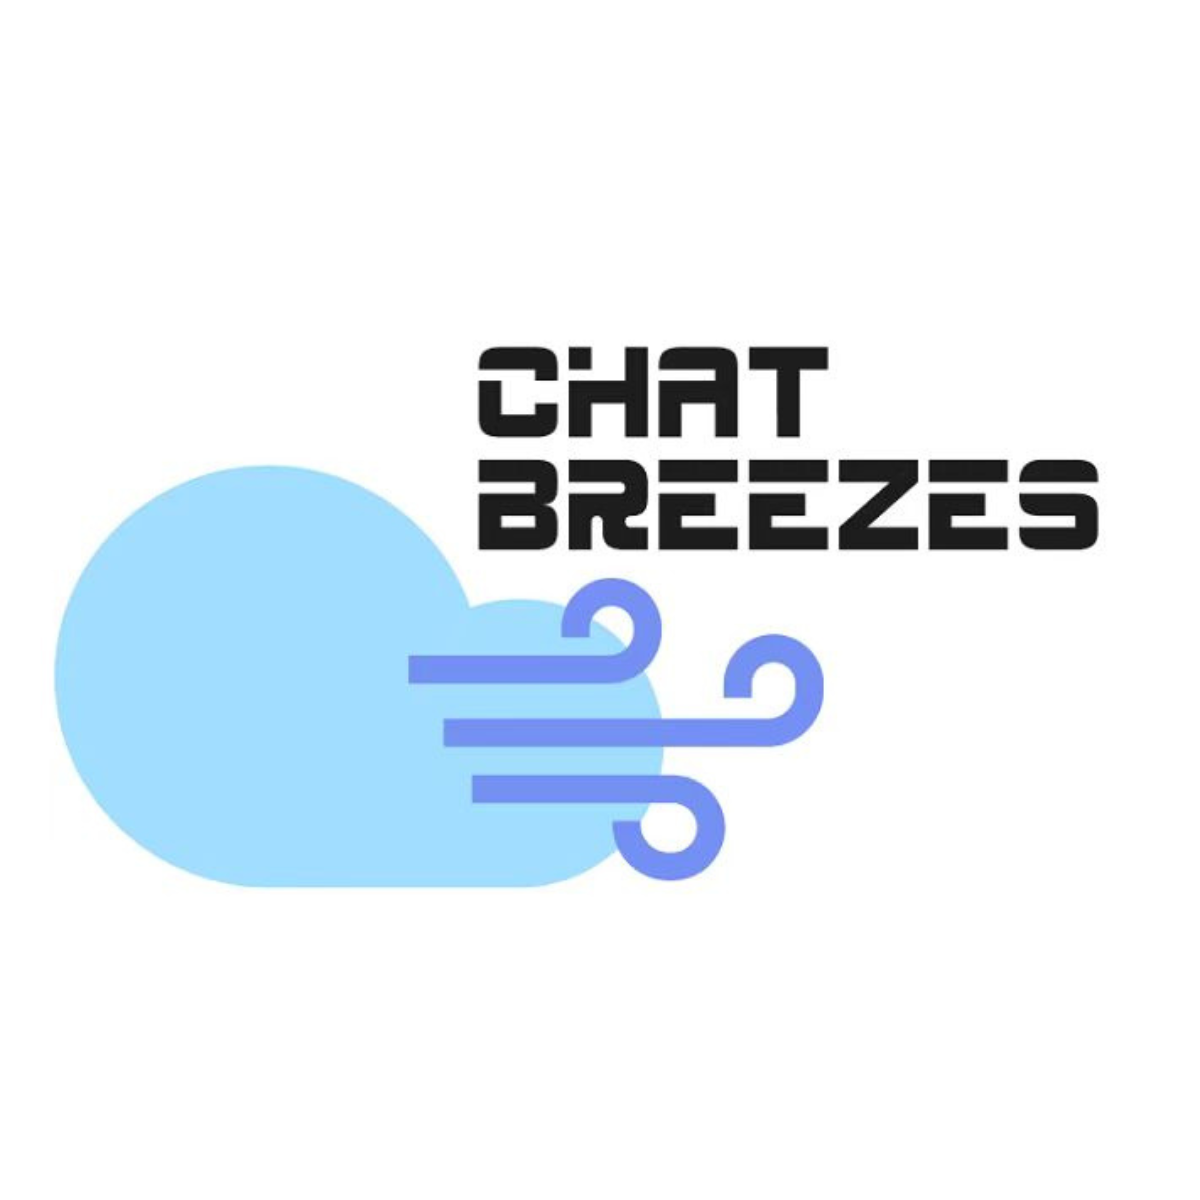 Chat Breezes logo